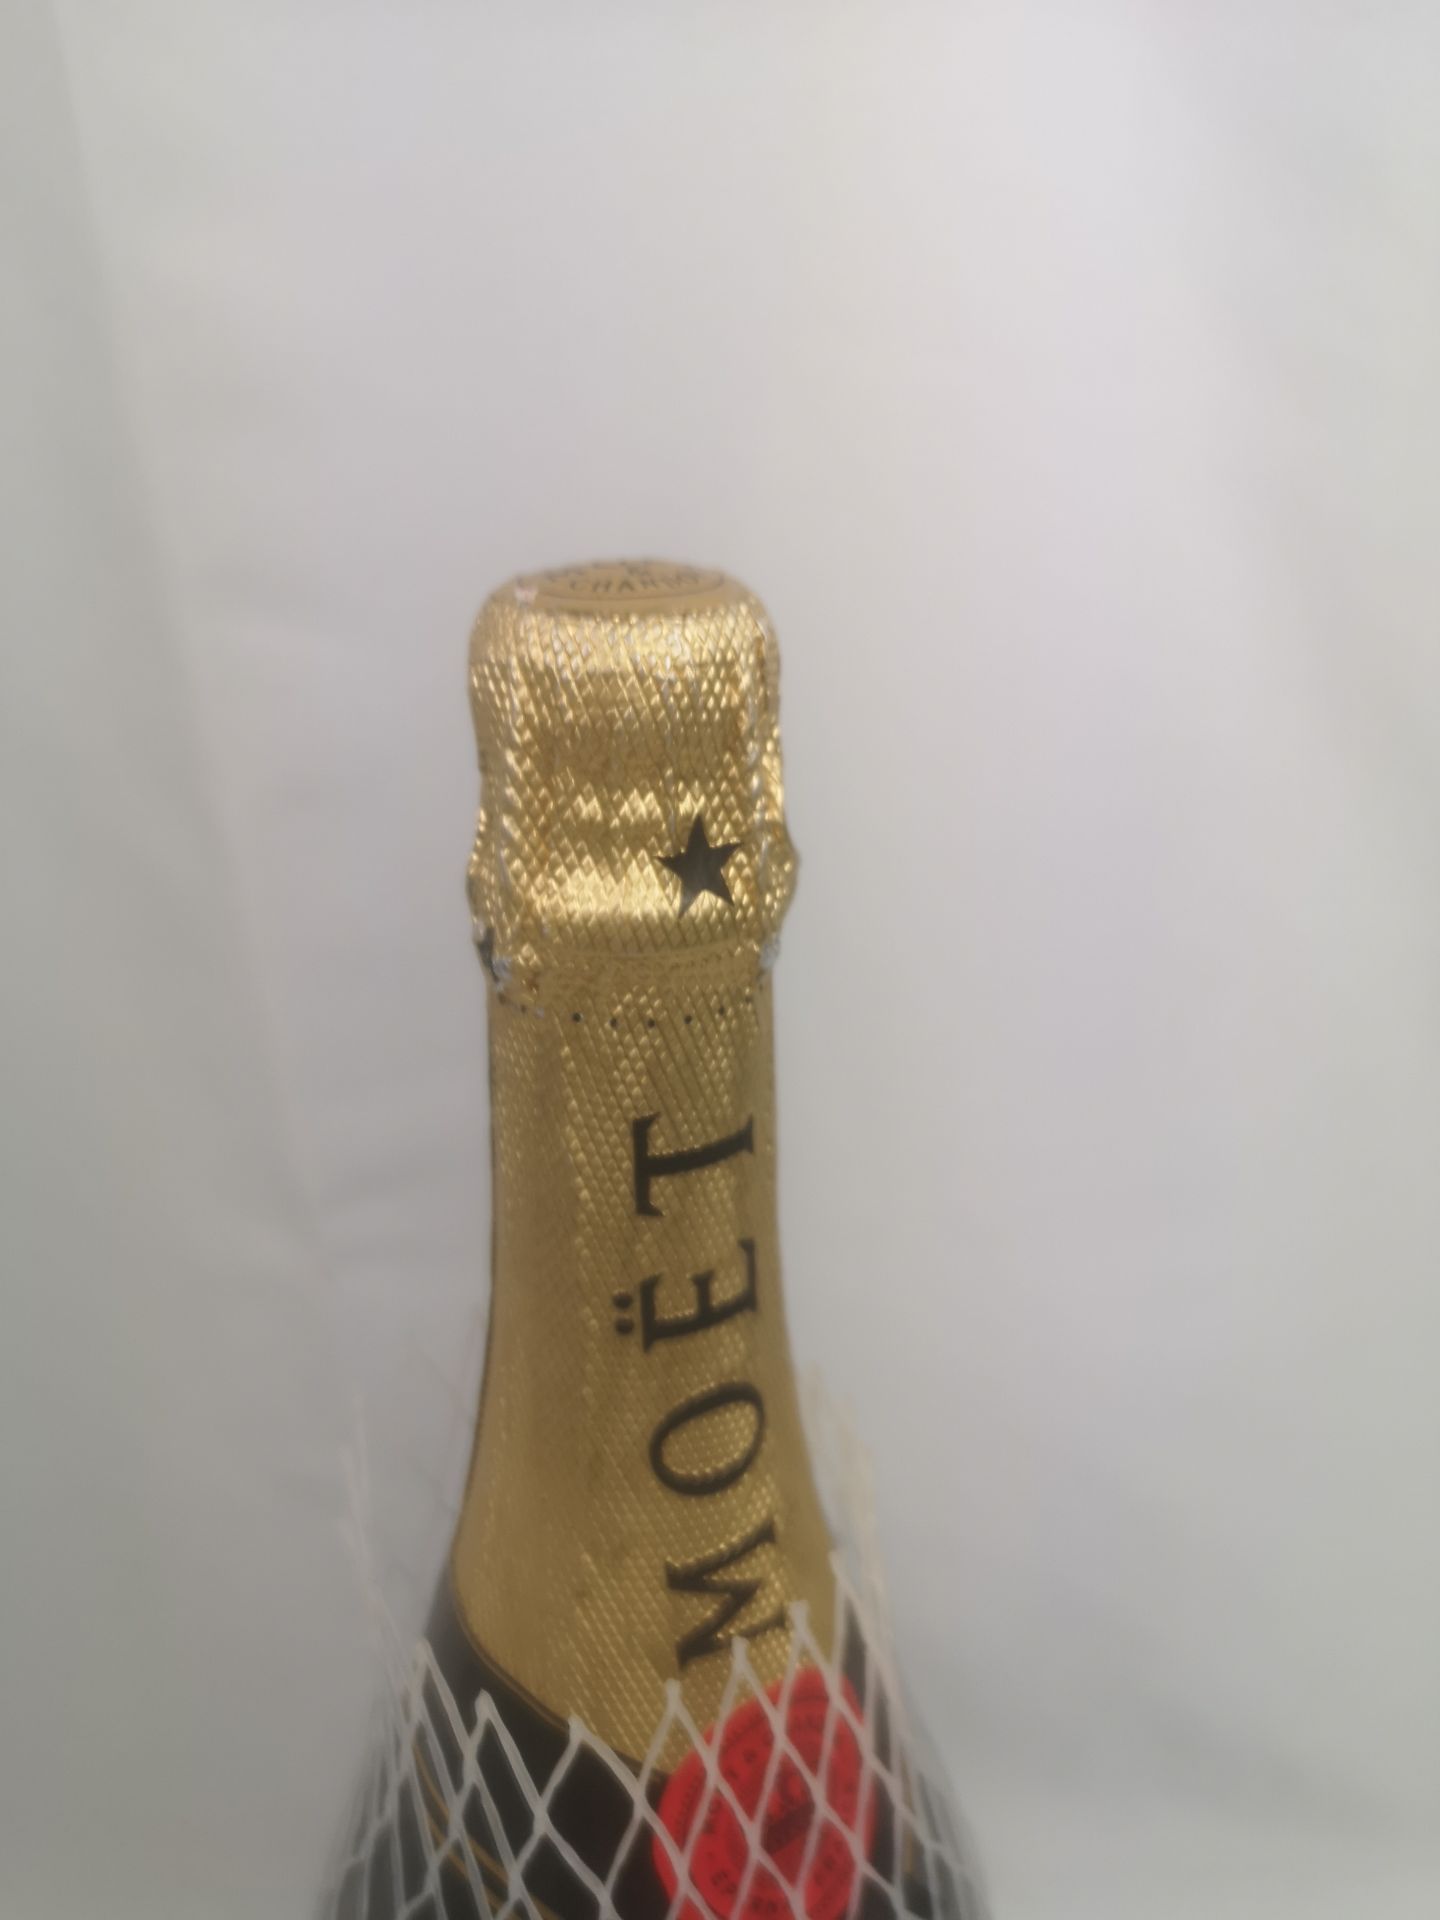 Magnum of Moet & Chandon champagne - Image 5 of 5